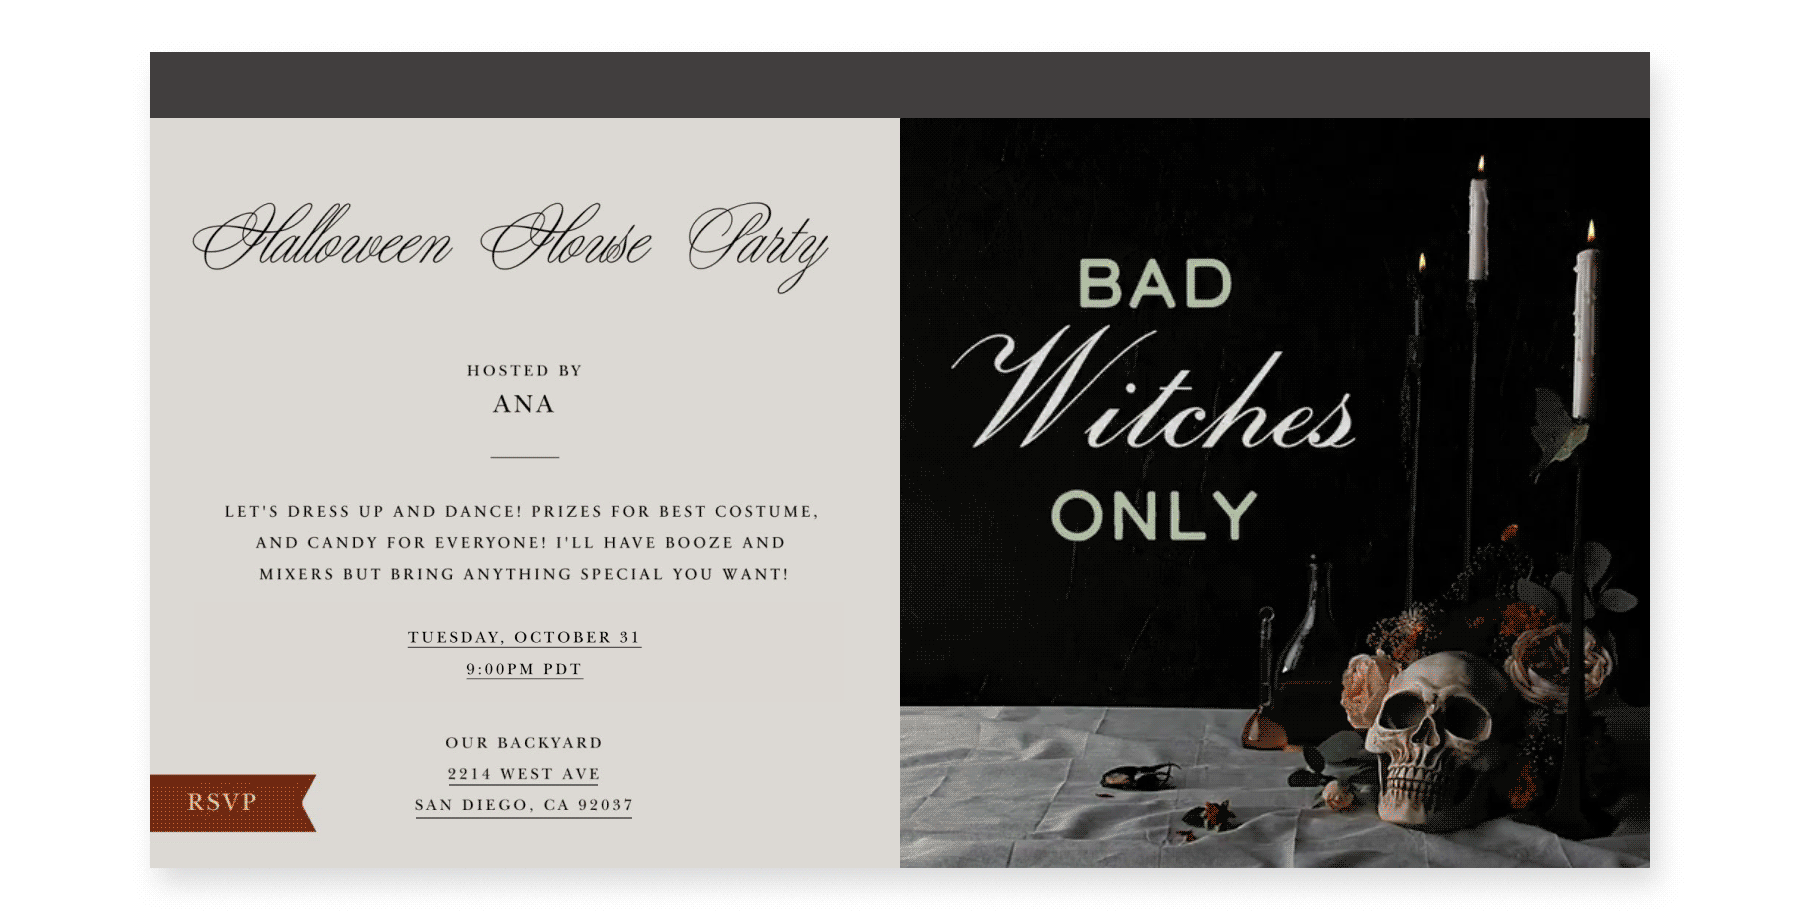 halloween costume party invitations wording